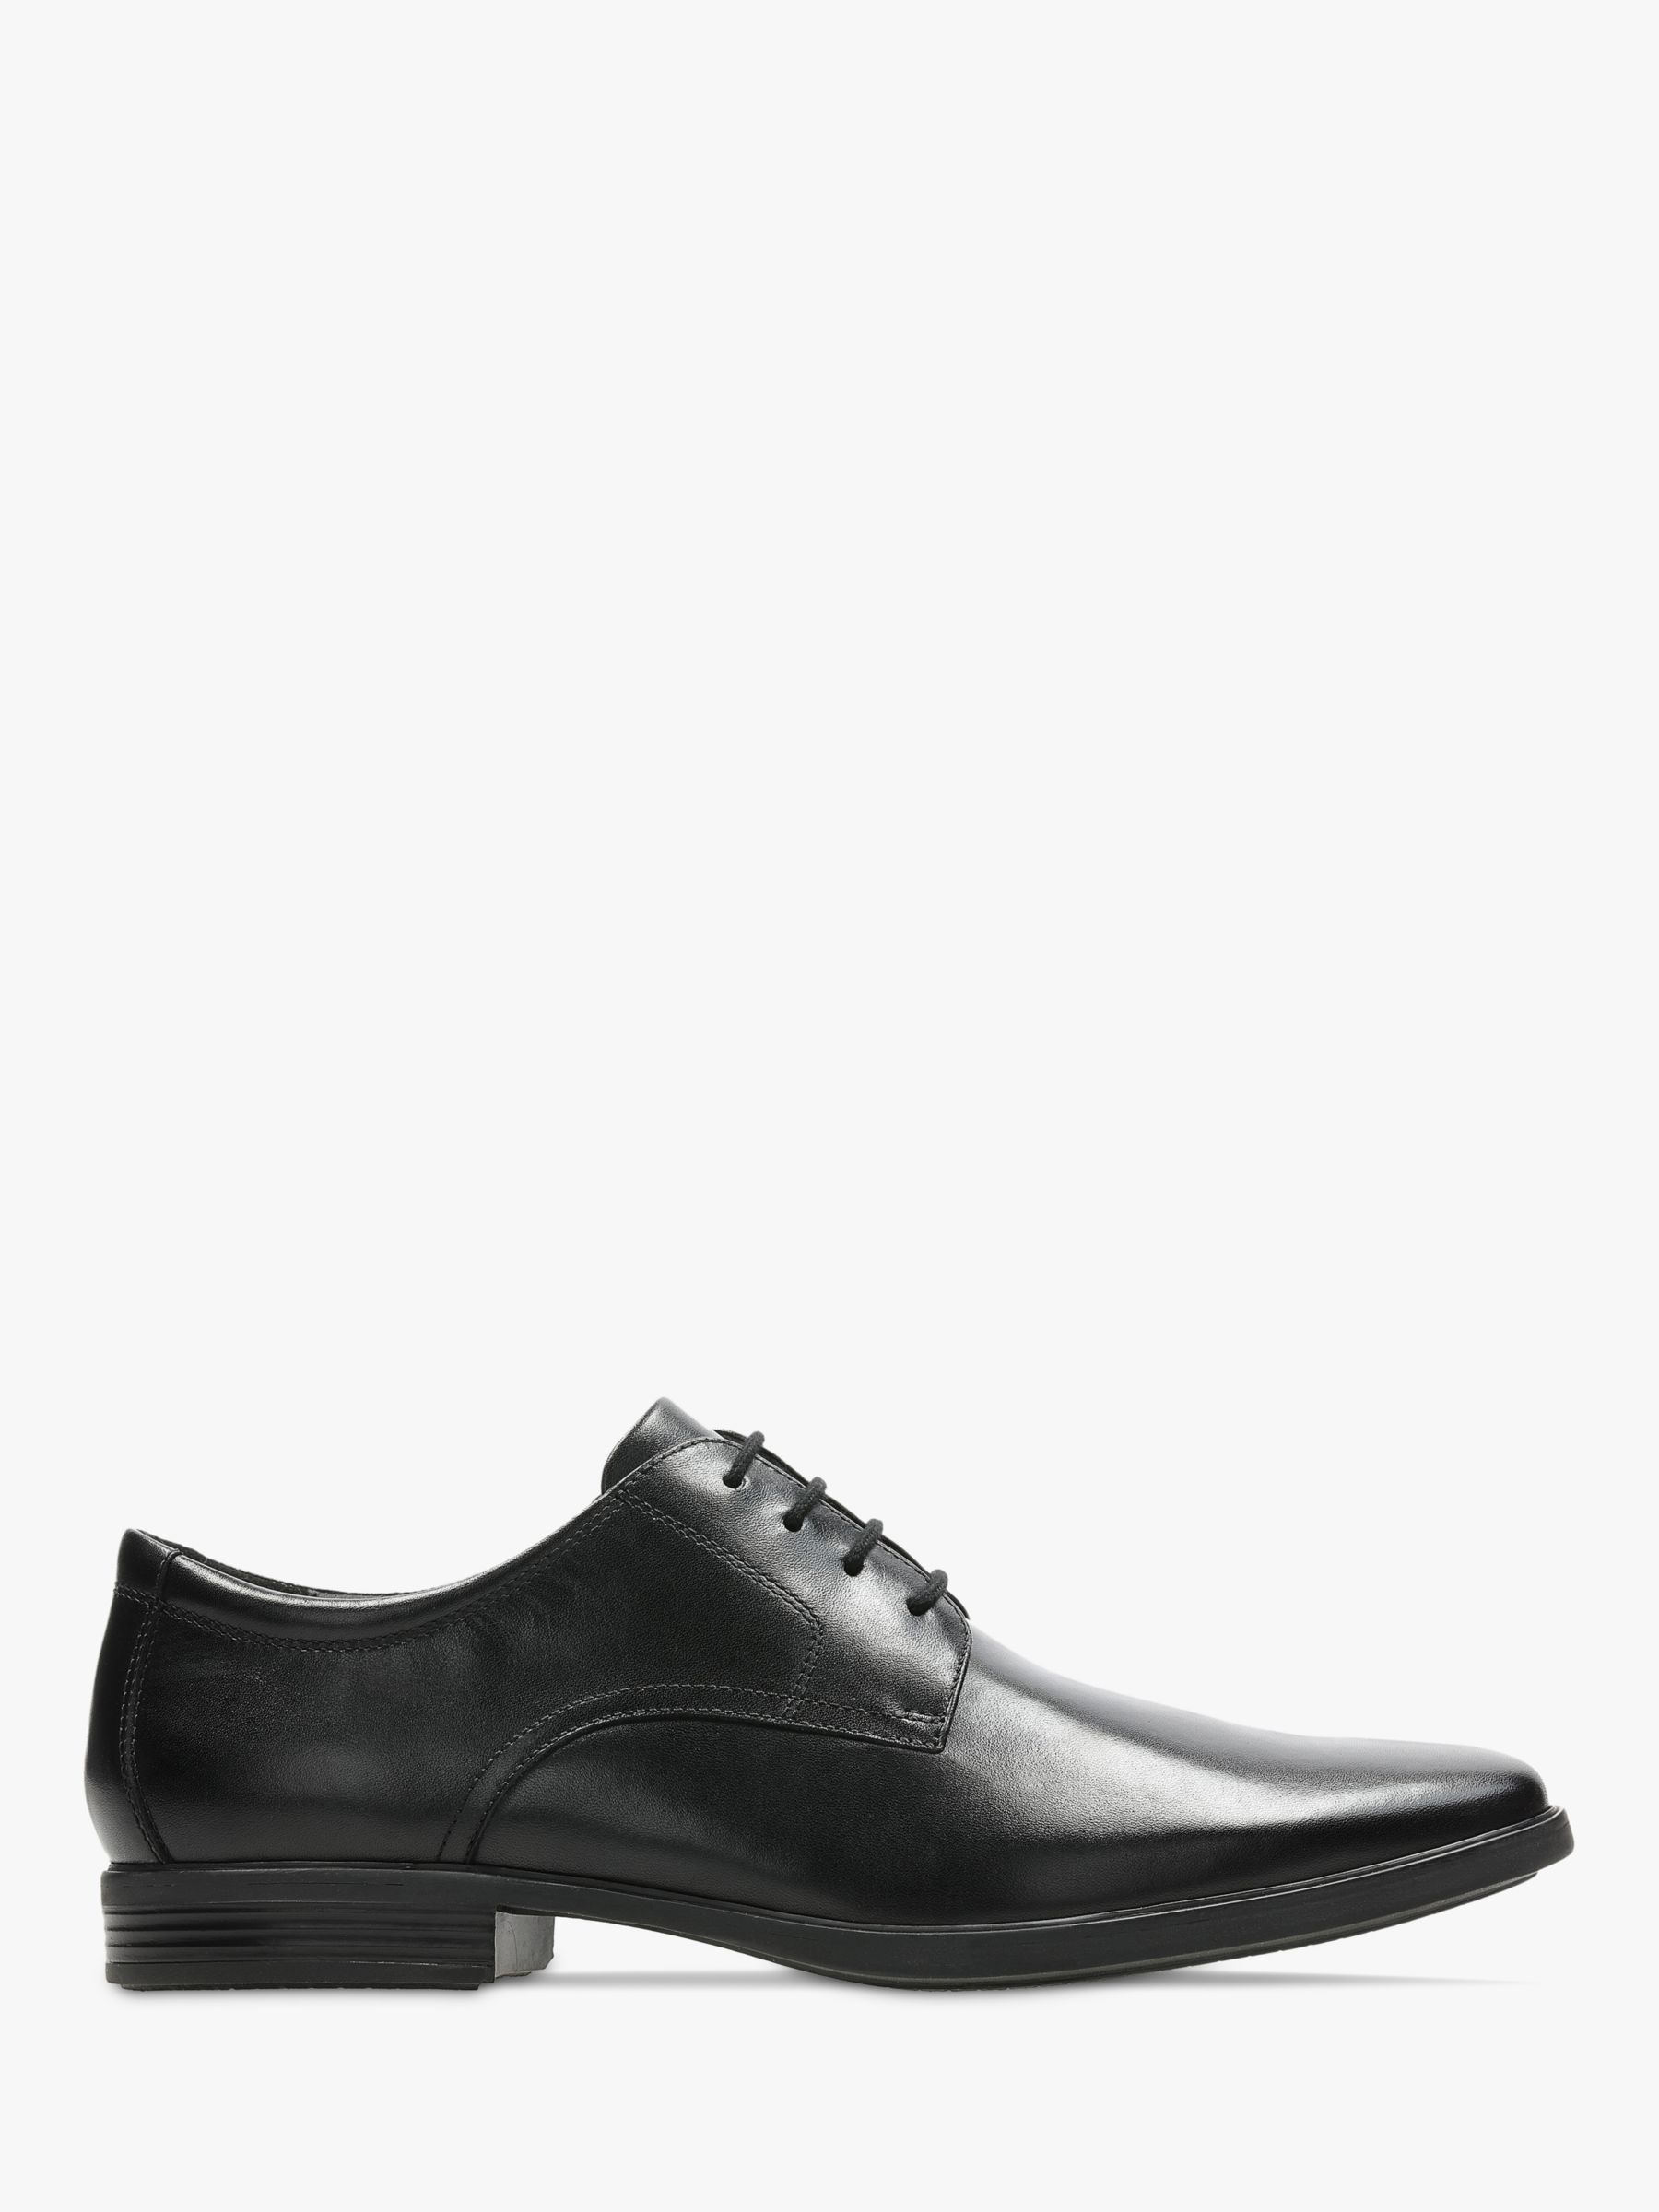 Clarks Howard Walk Leather Shoes, Black at John Lewis & Partners